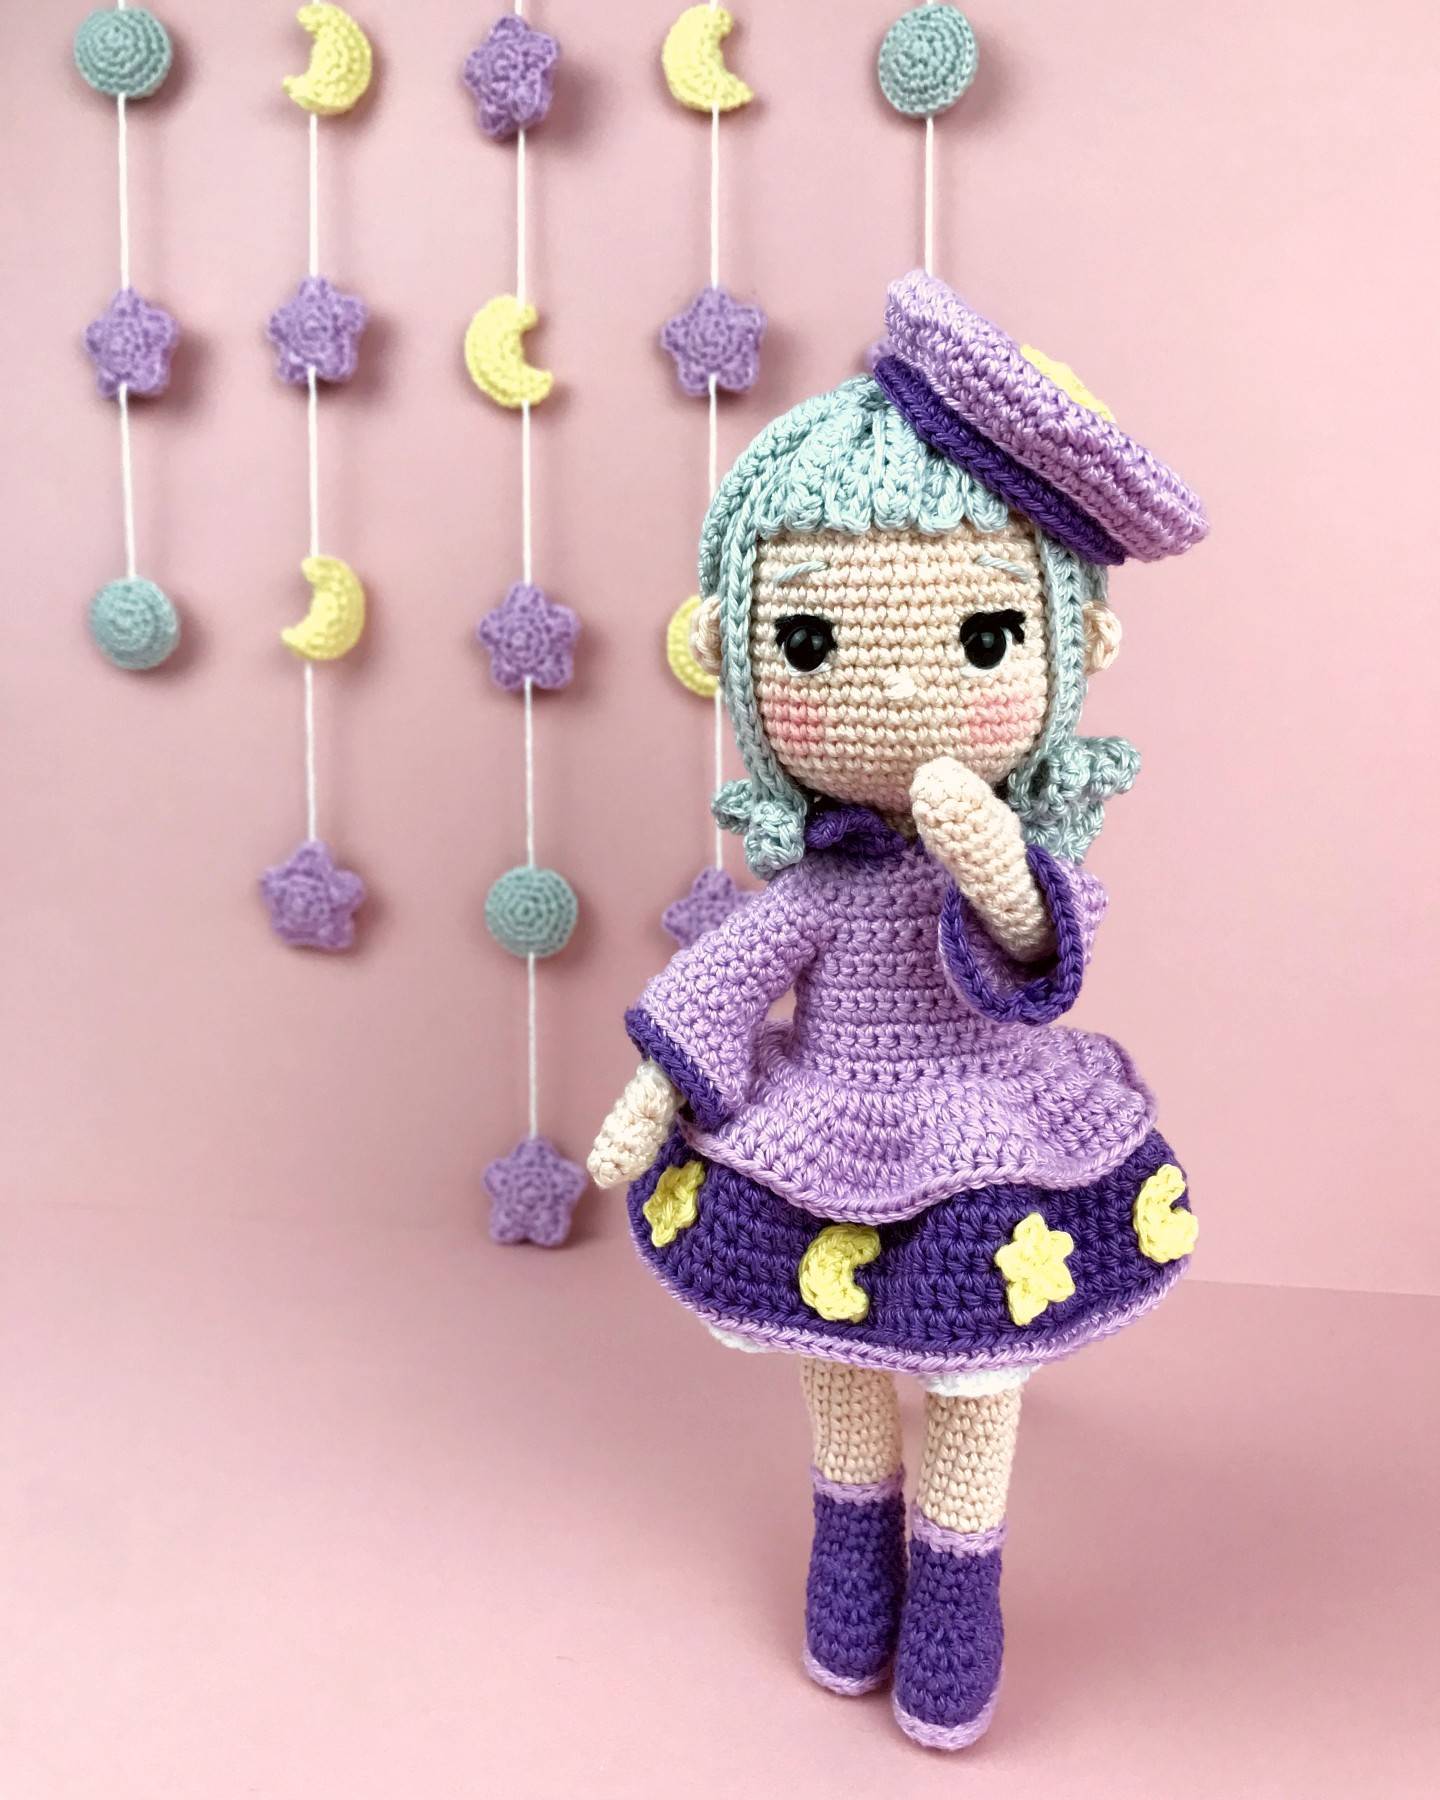 Starrya, girl from stars - Crochet Amigurumi pattern